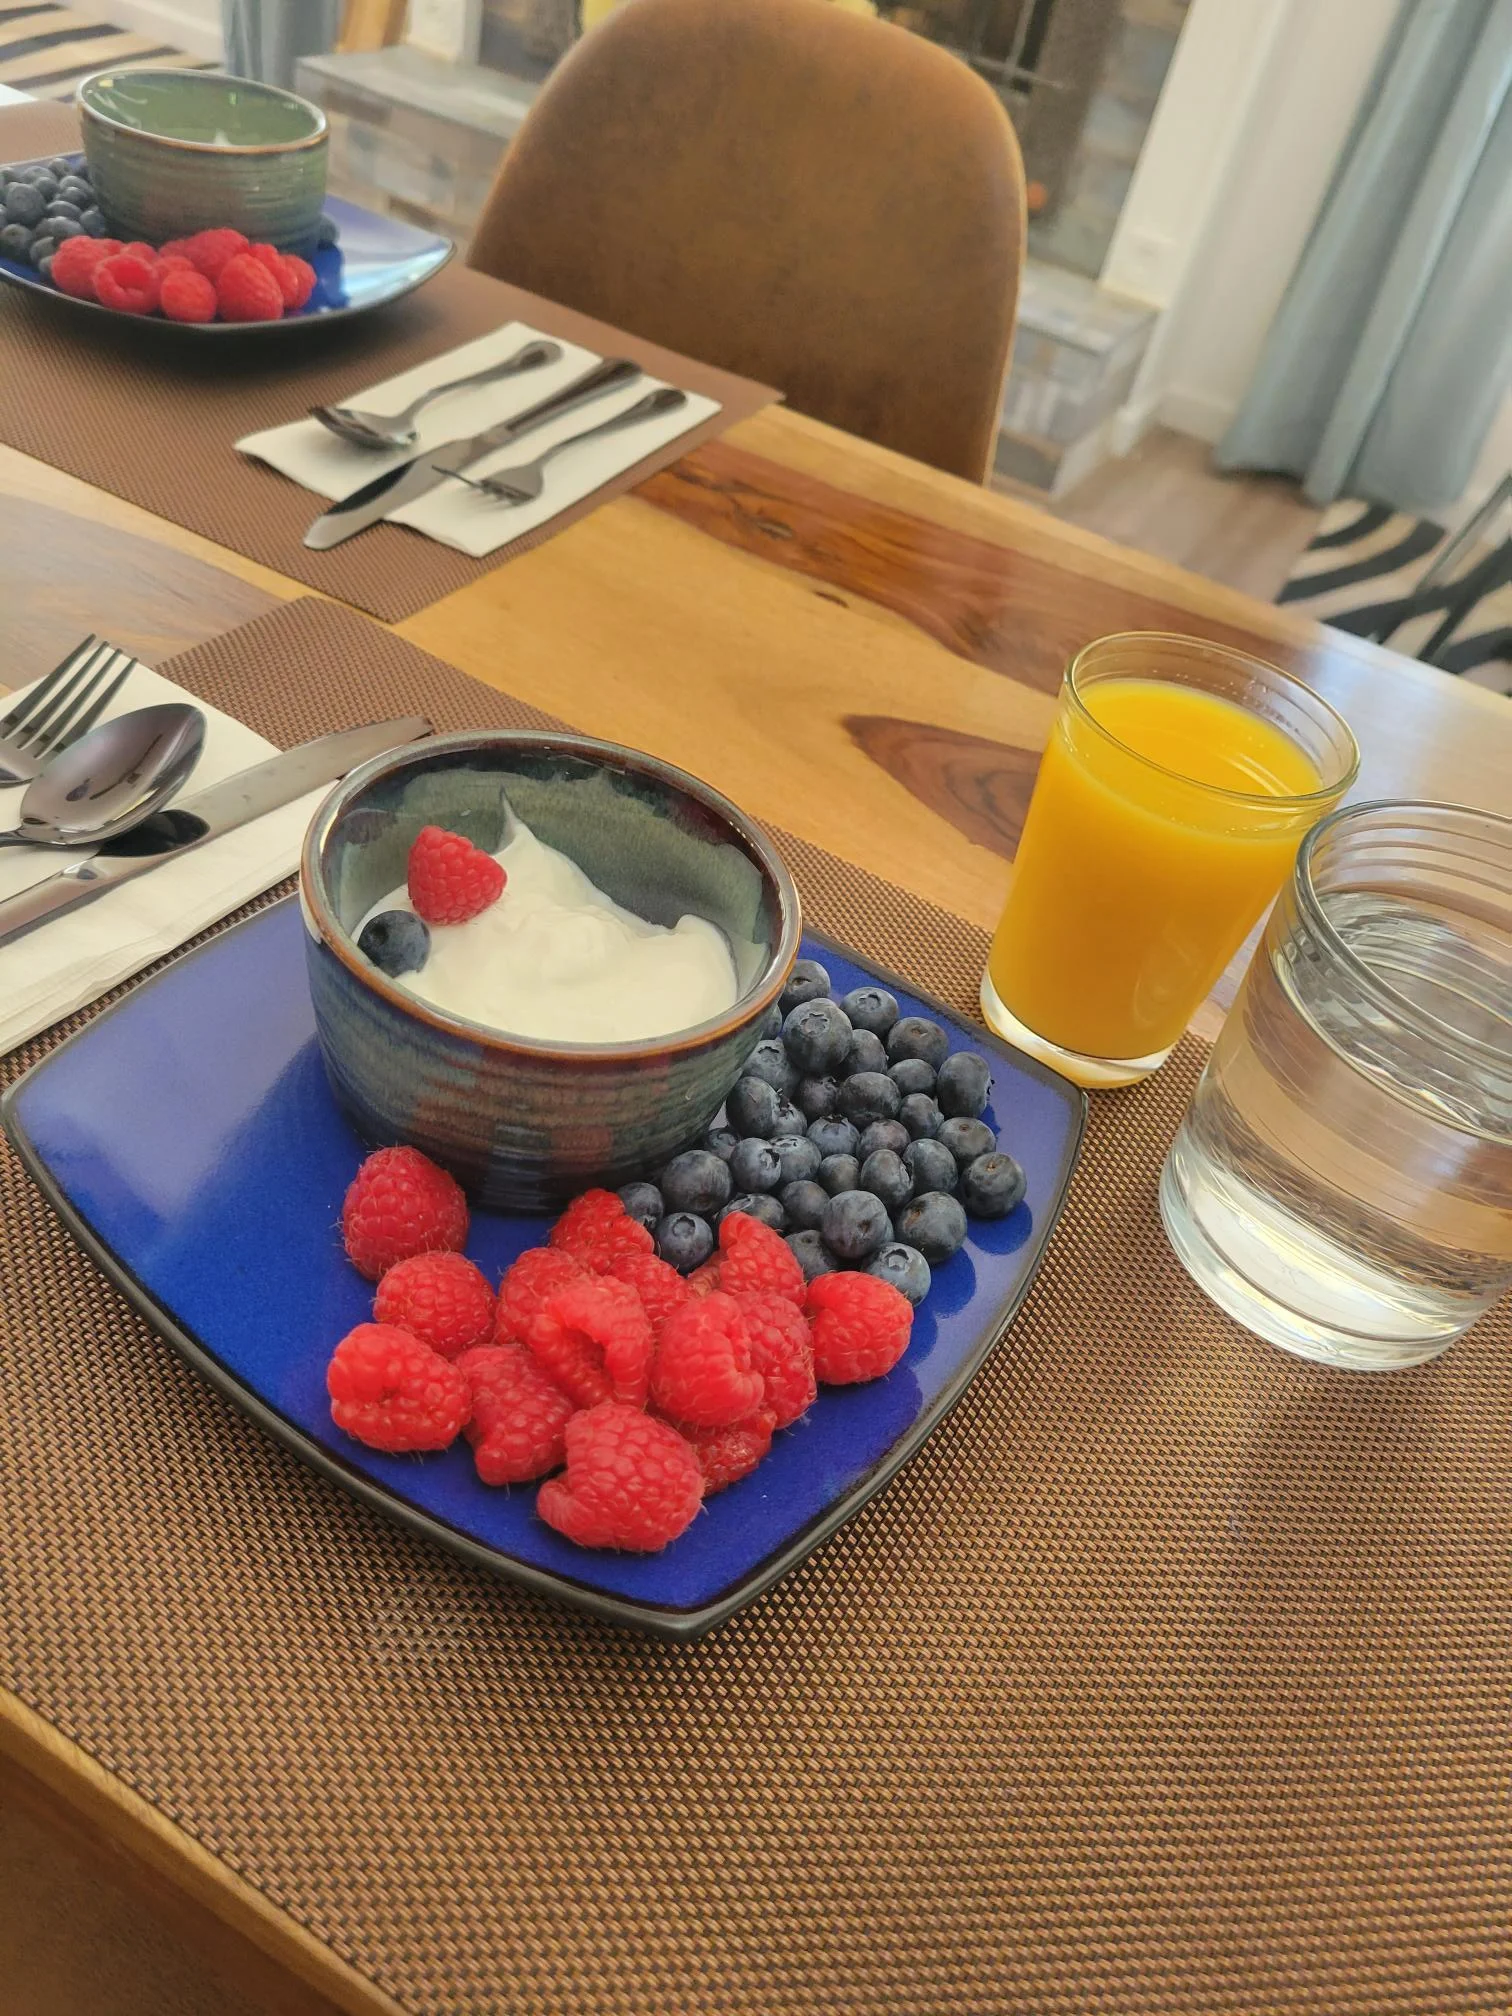 fruit yogurt and juice